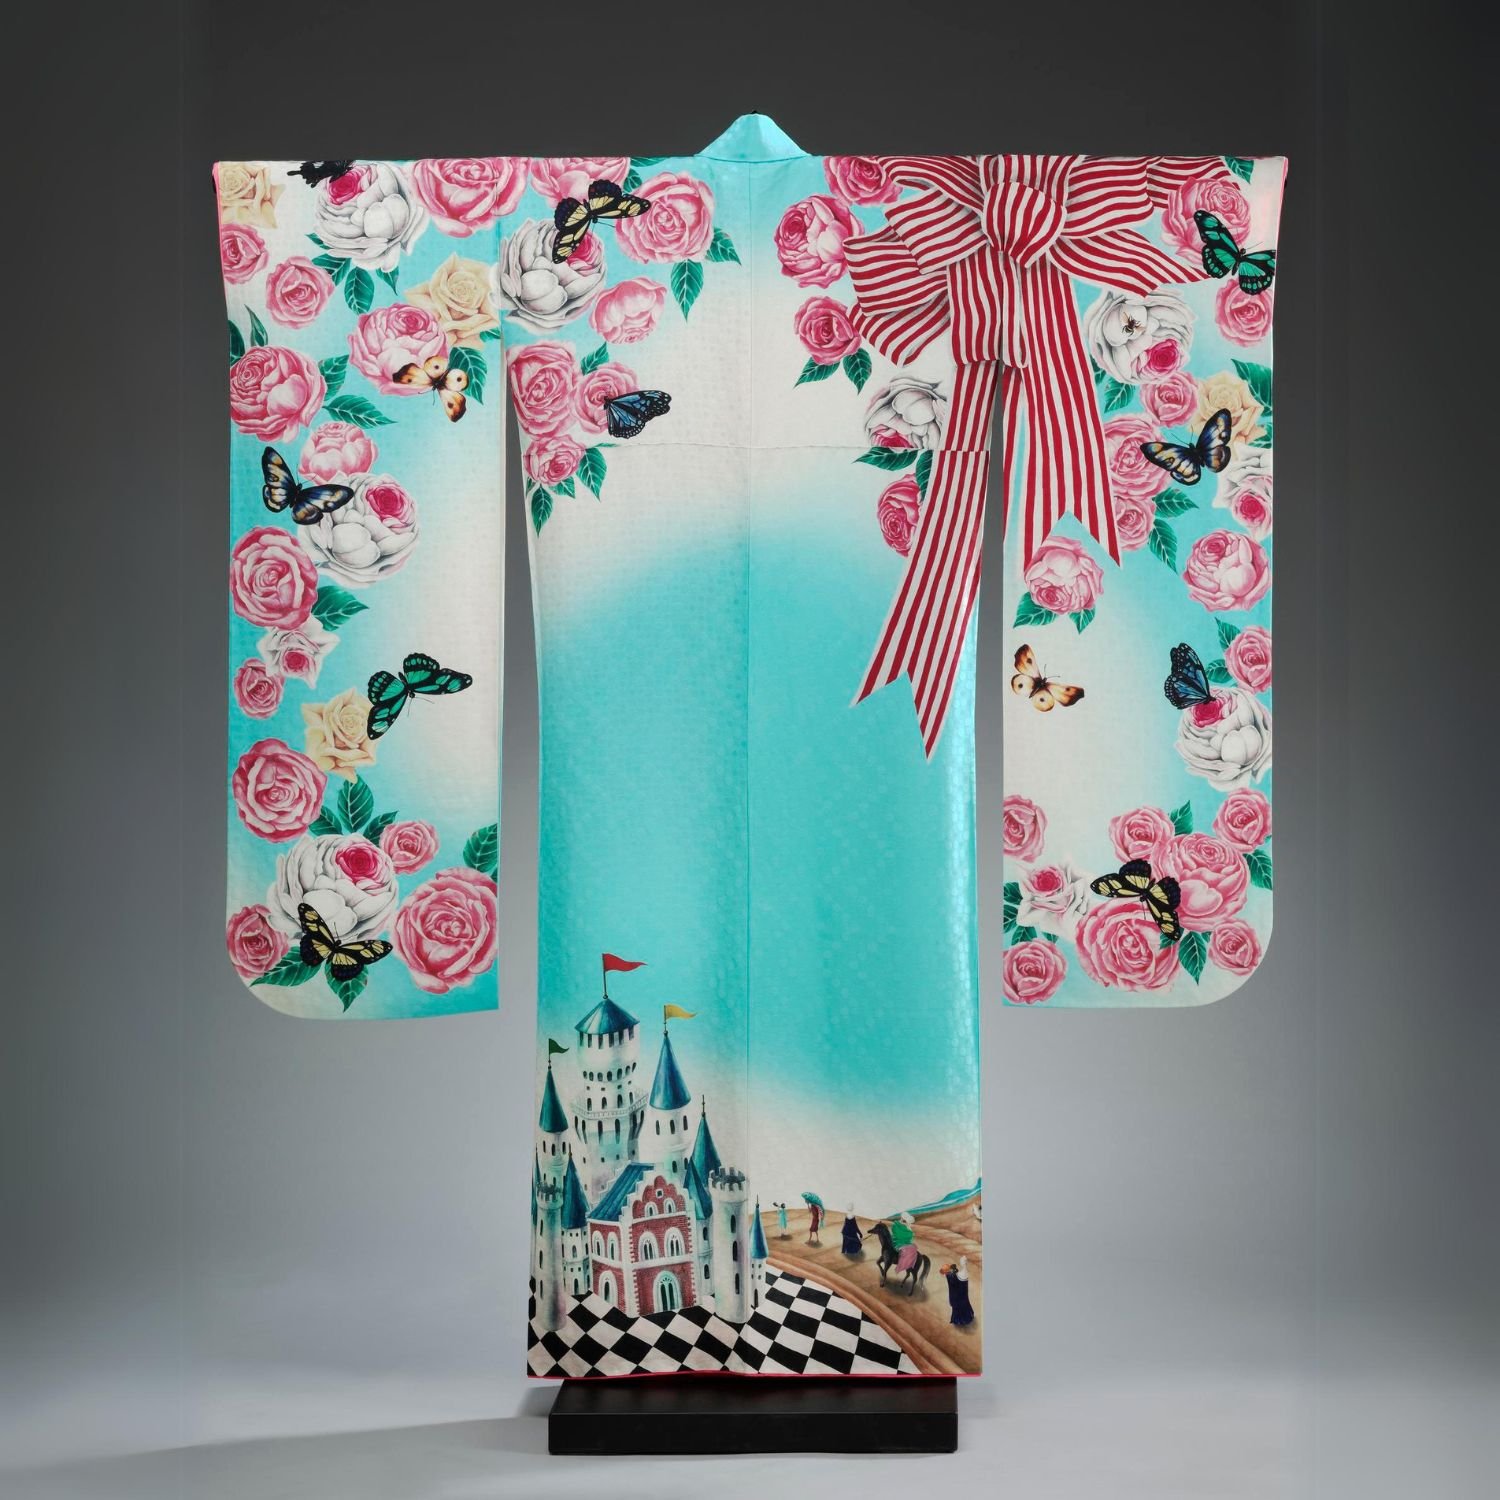 kimono-kyoto-to-catwalk-dundee-v-and-a-exhibition.jpg